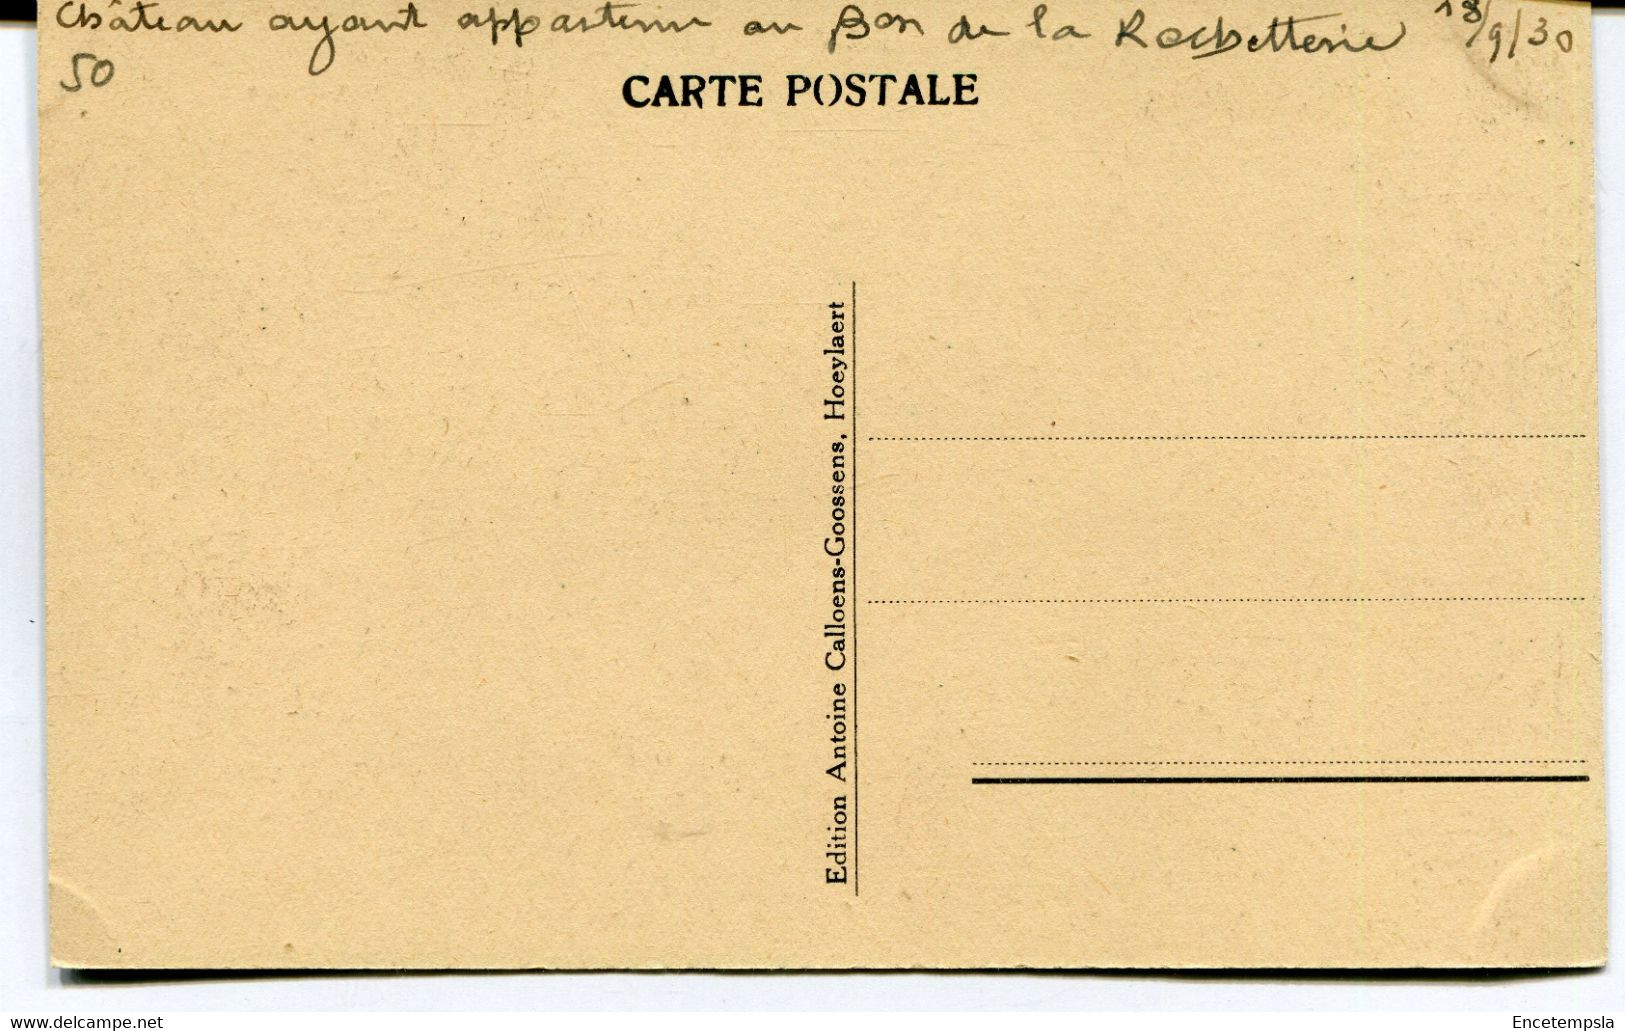 CPA - Carte Postale - Belgique - Hoeylaert - Maison Communale (AT16648) - Hoeilaart